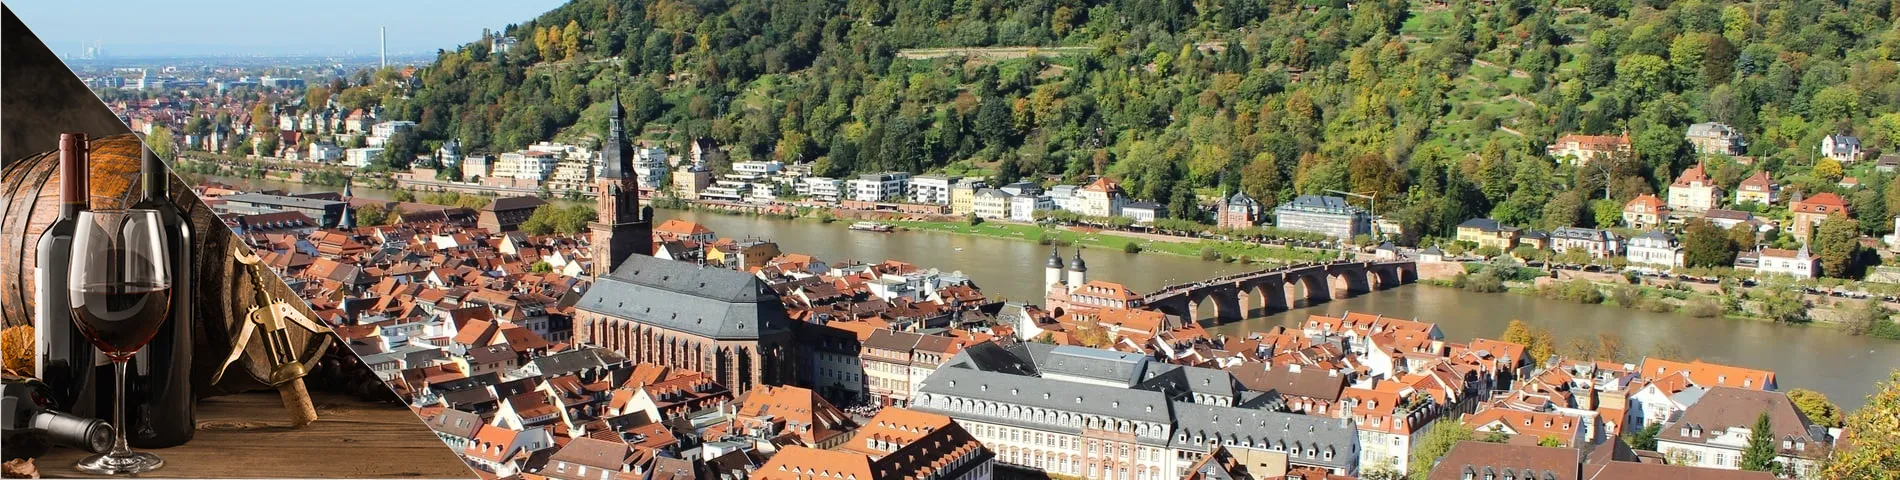 Heidelberg - Nemčina a enológia